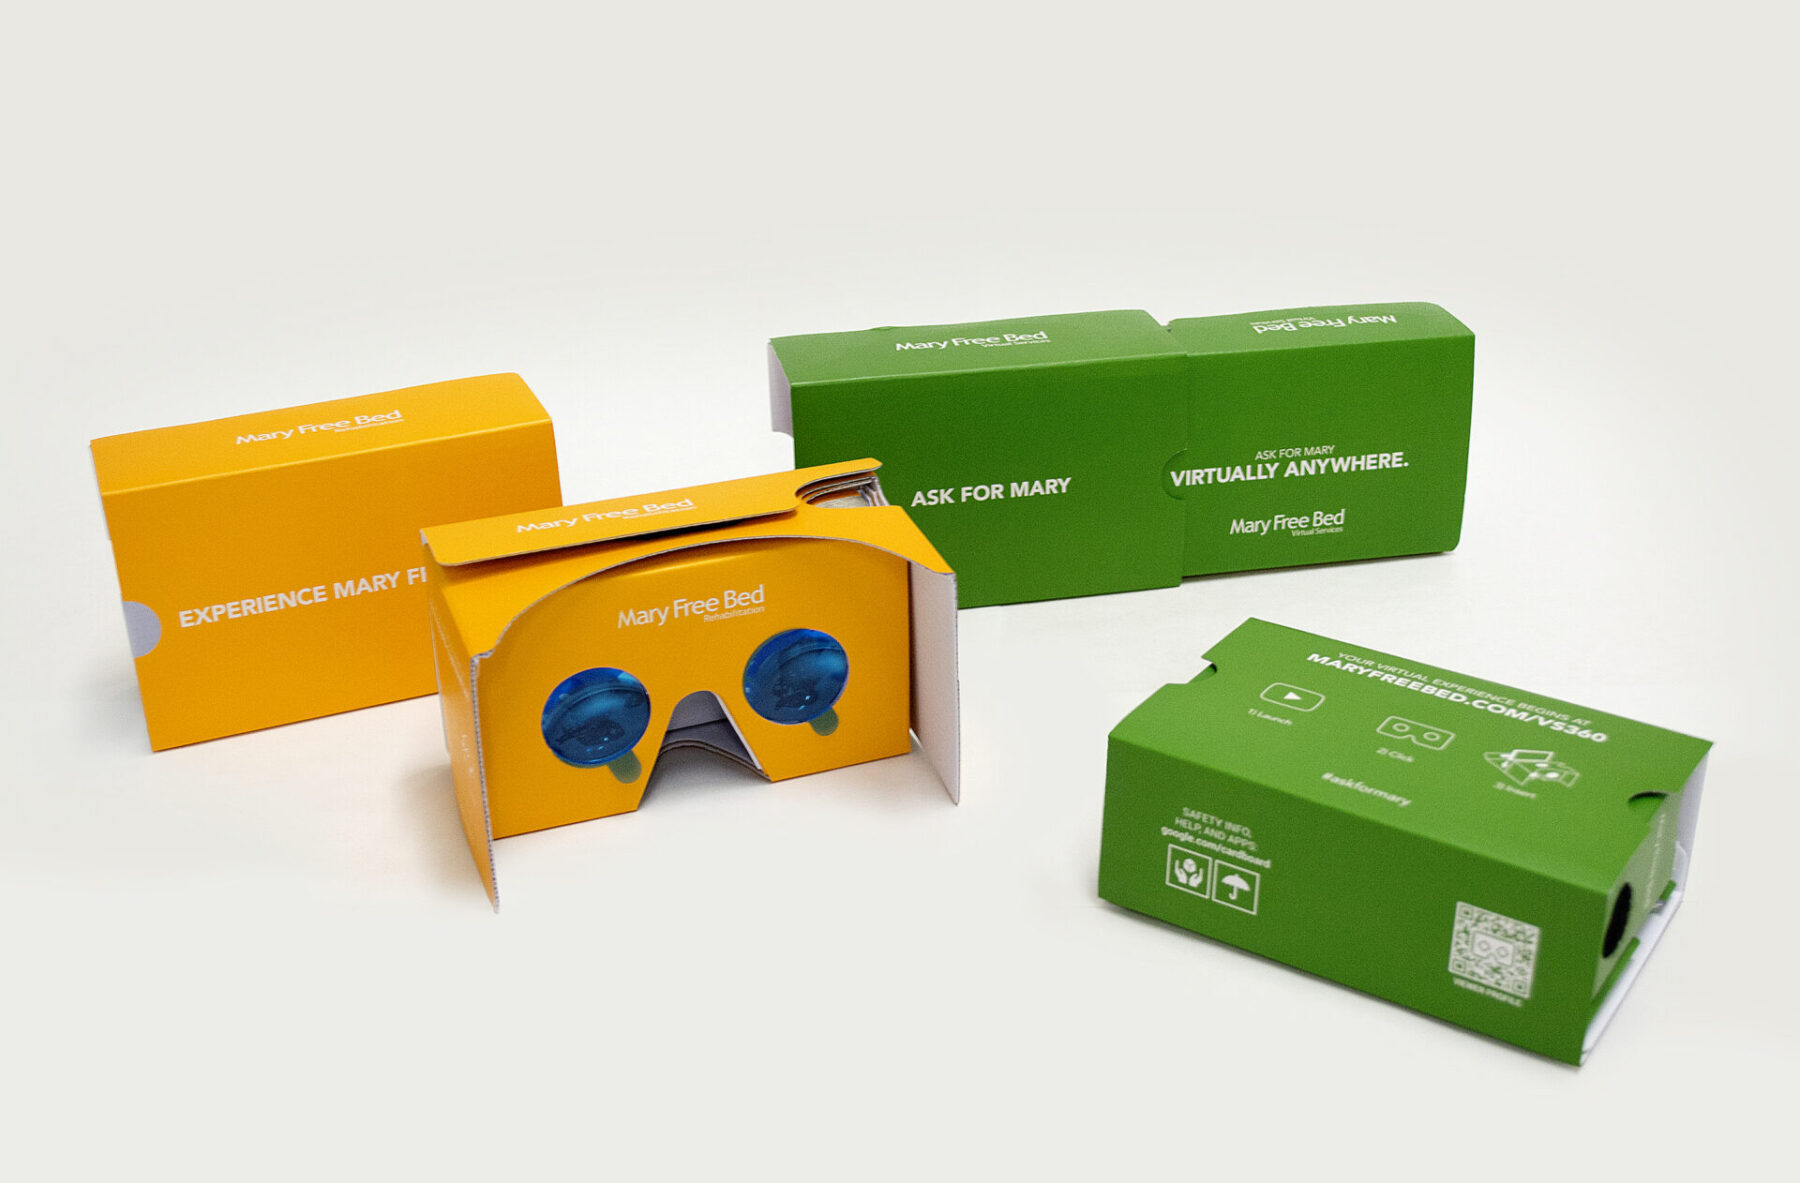 Google Cardboard VR headset design promoting virtual rehabilitation services